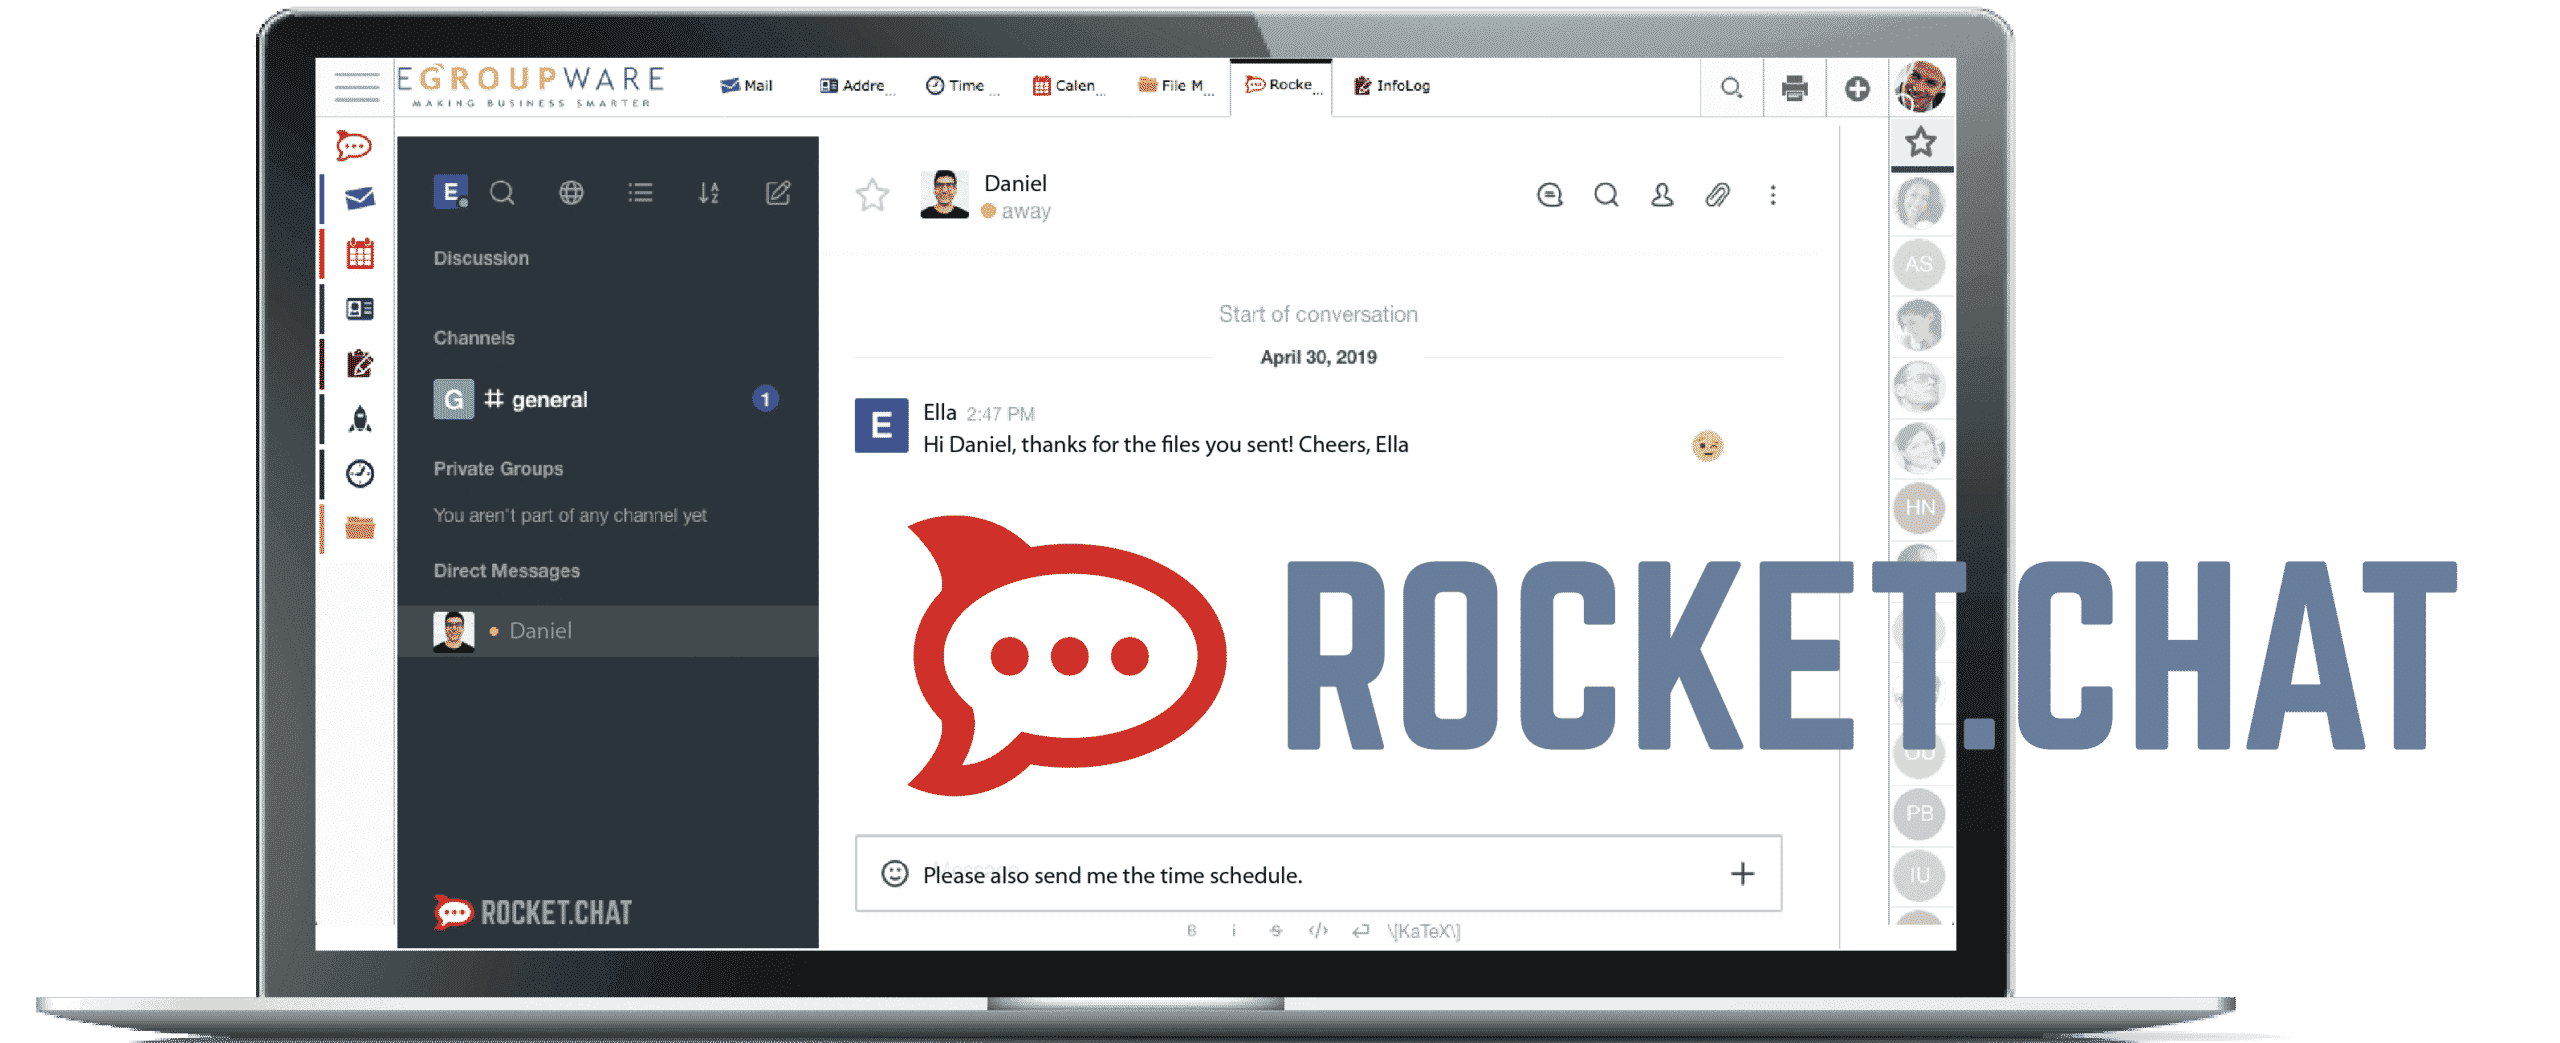 Rocket chat video